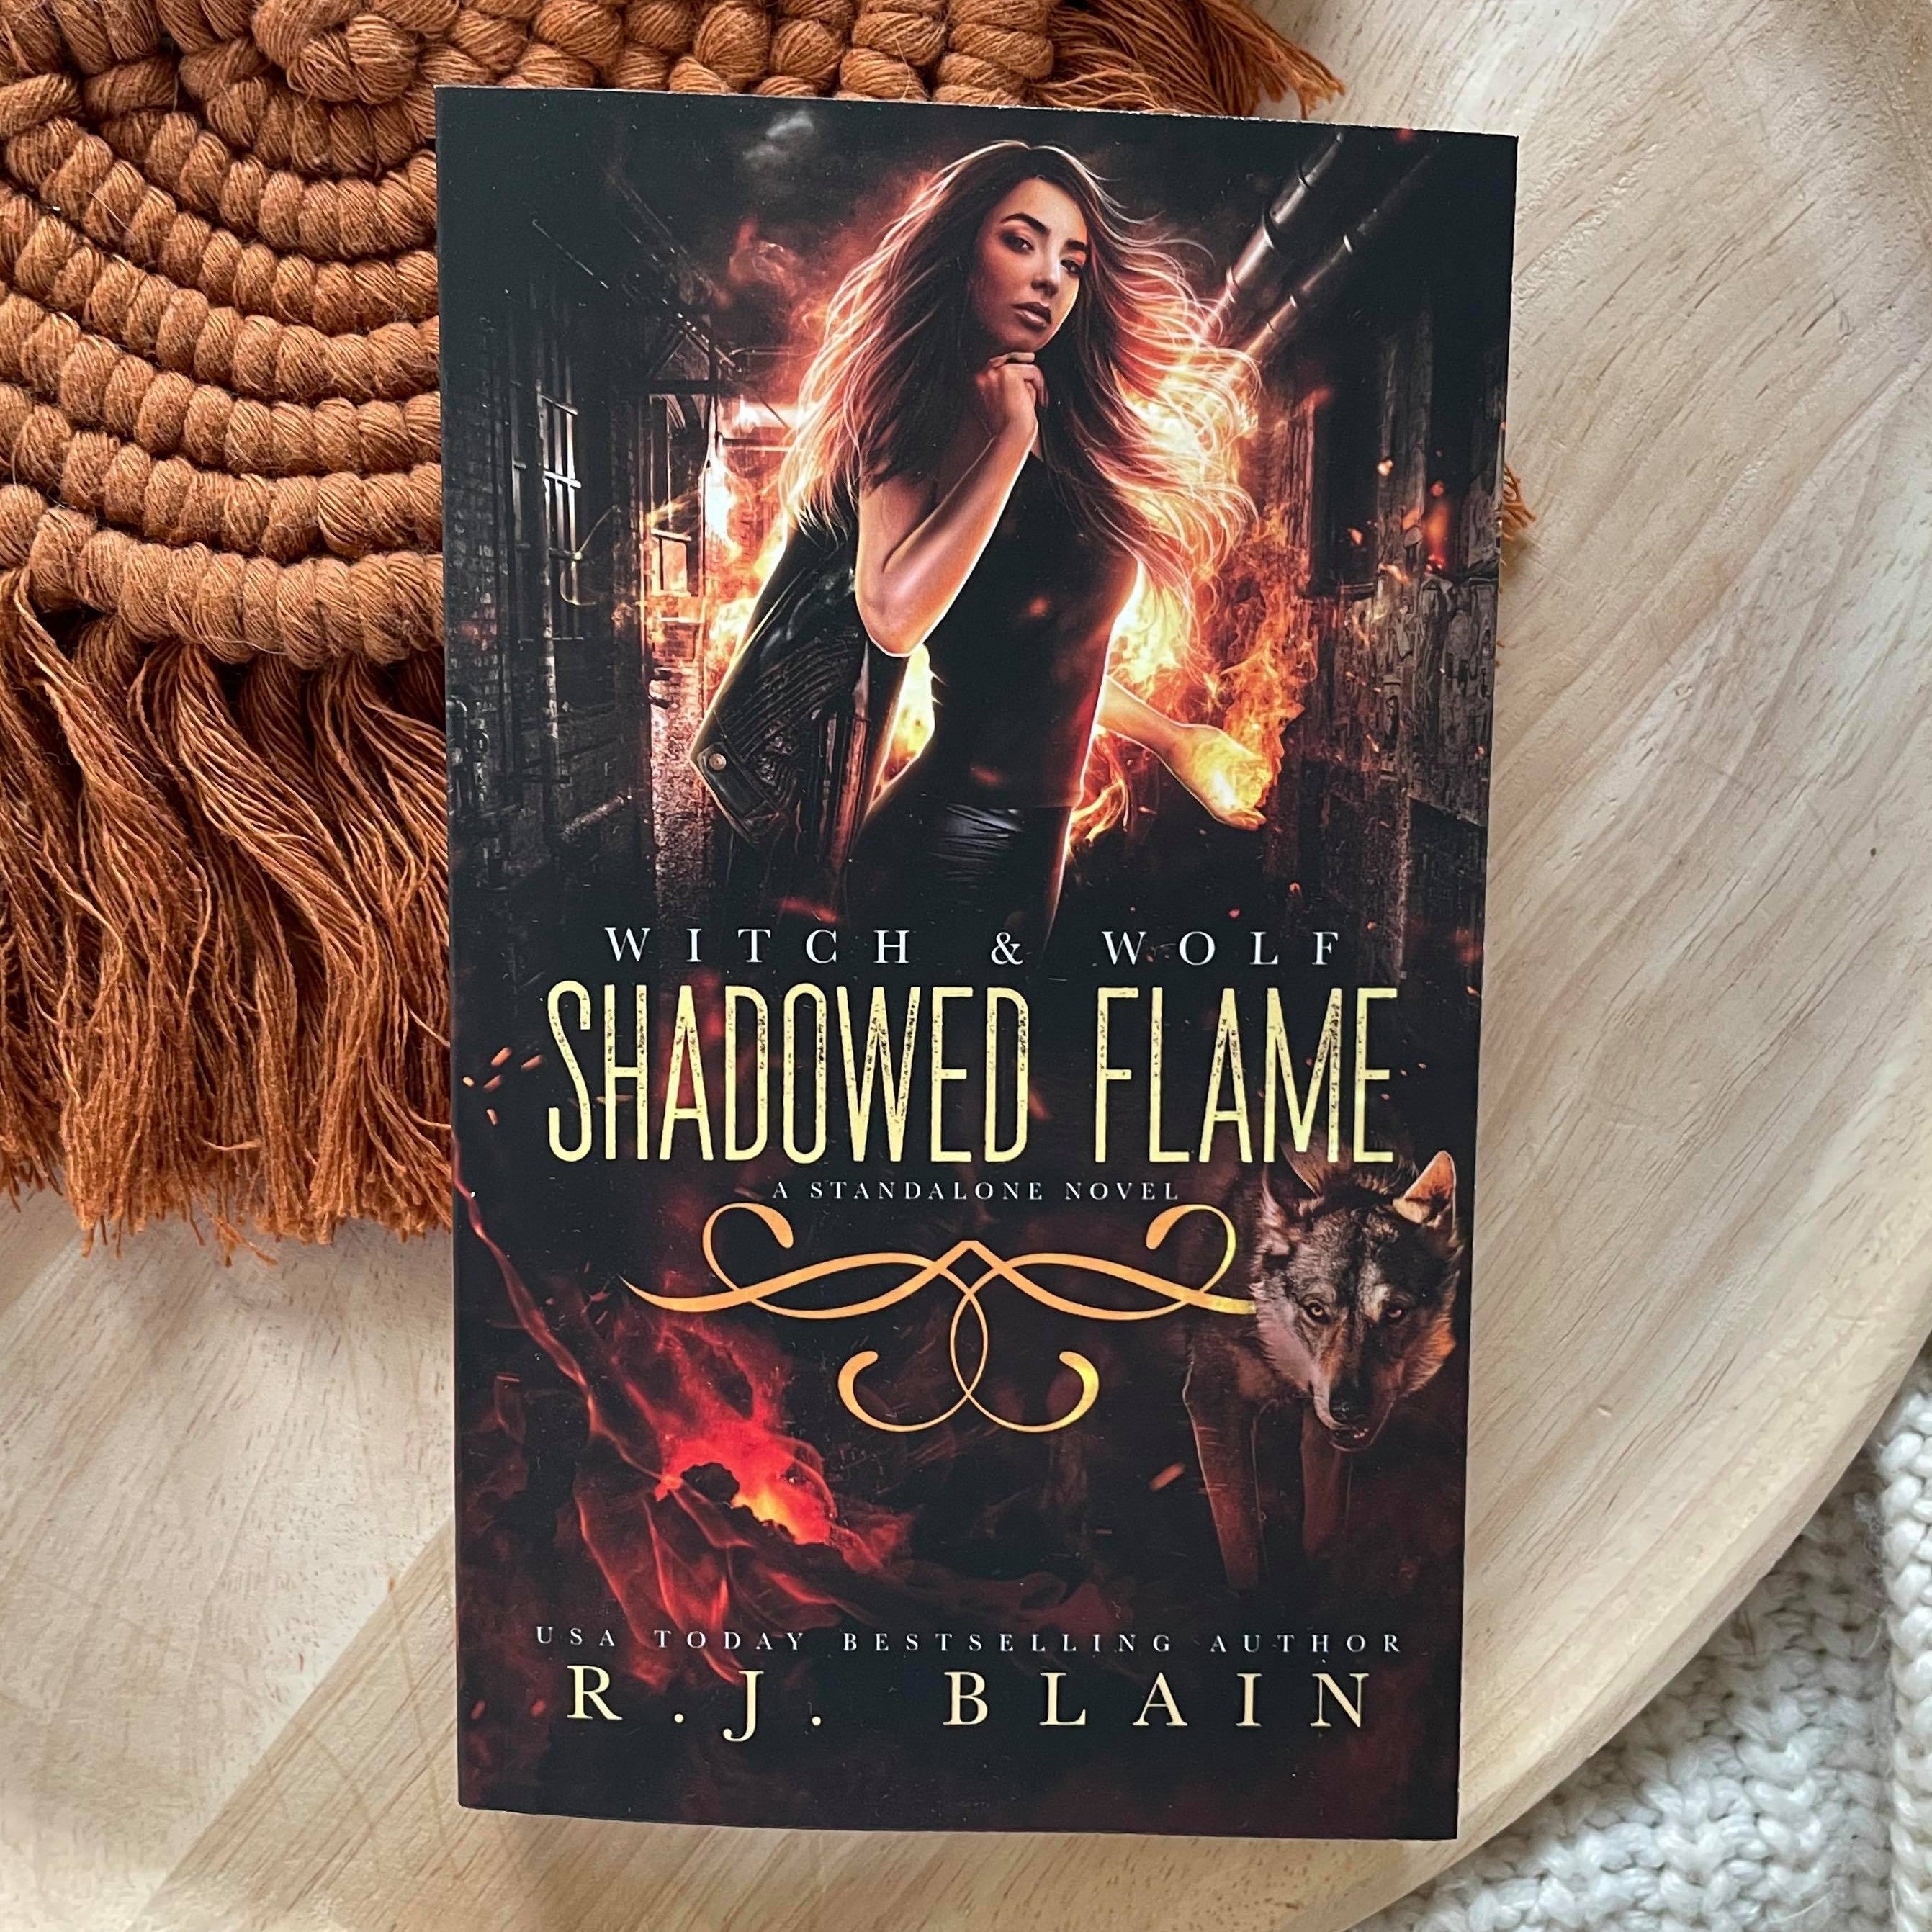 Shadowed Flame by R. J. Blain